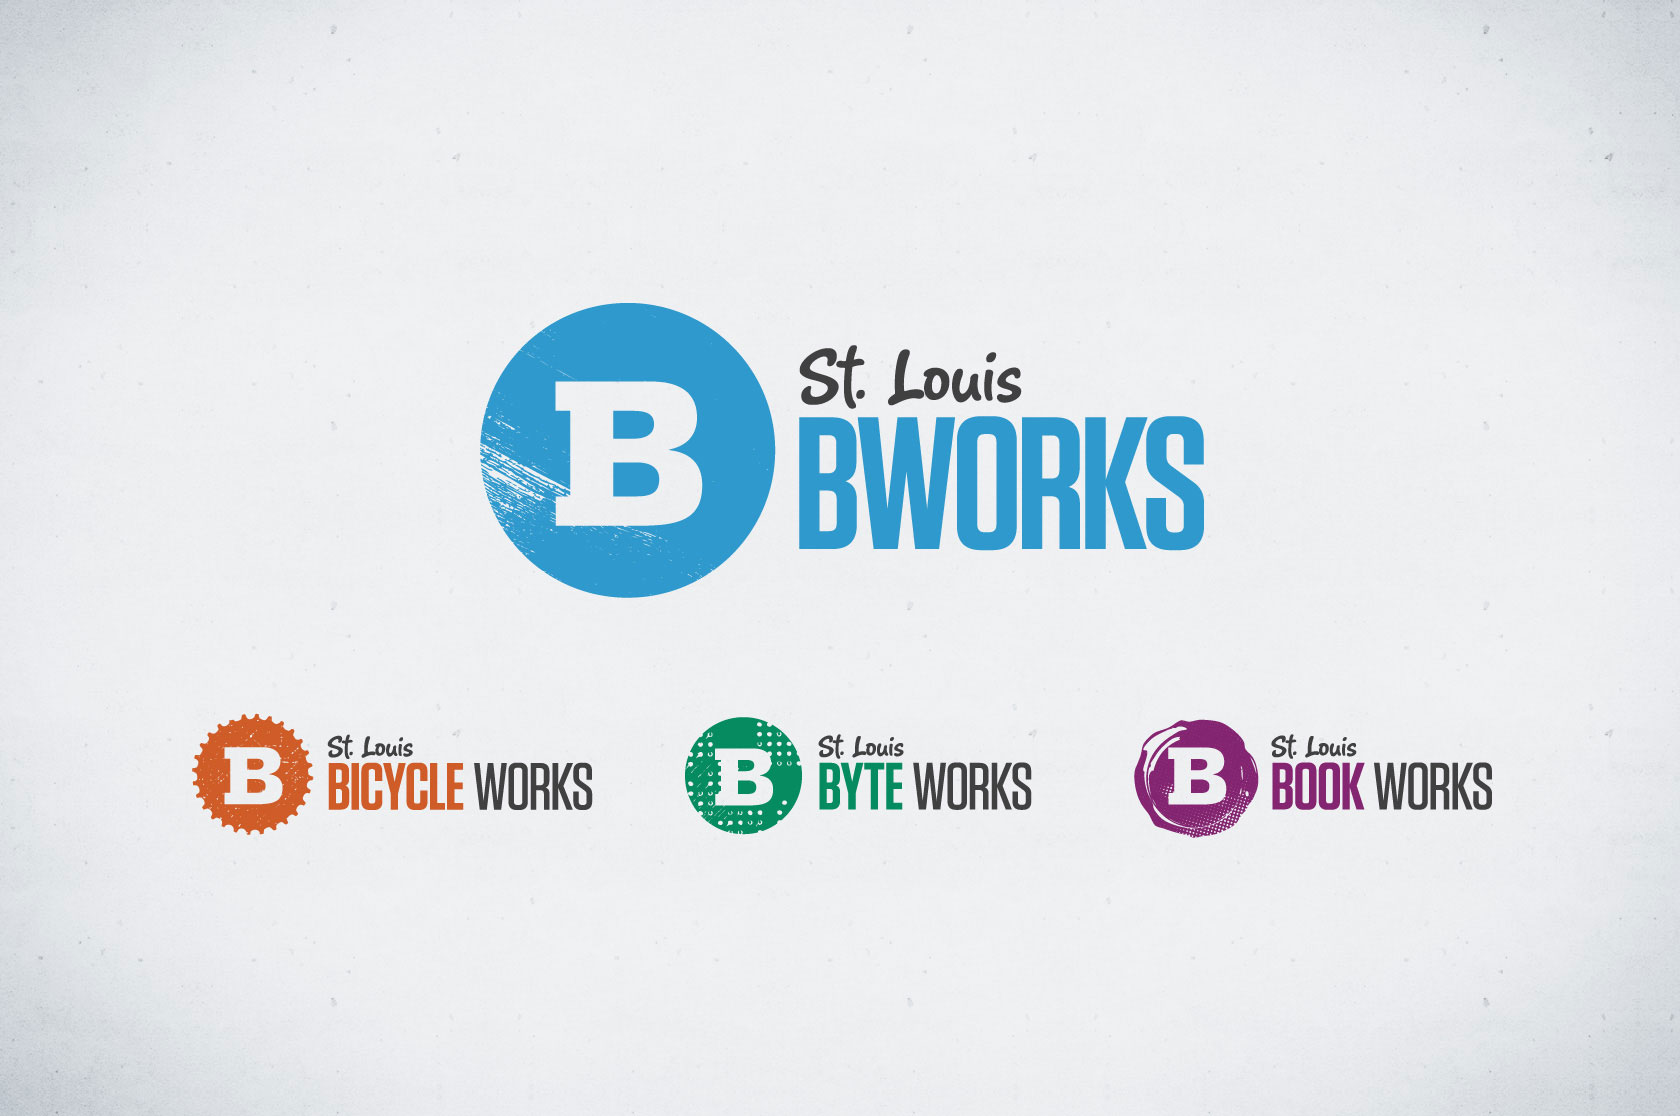 St. Louis BWORKS branding and logo design